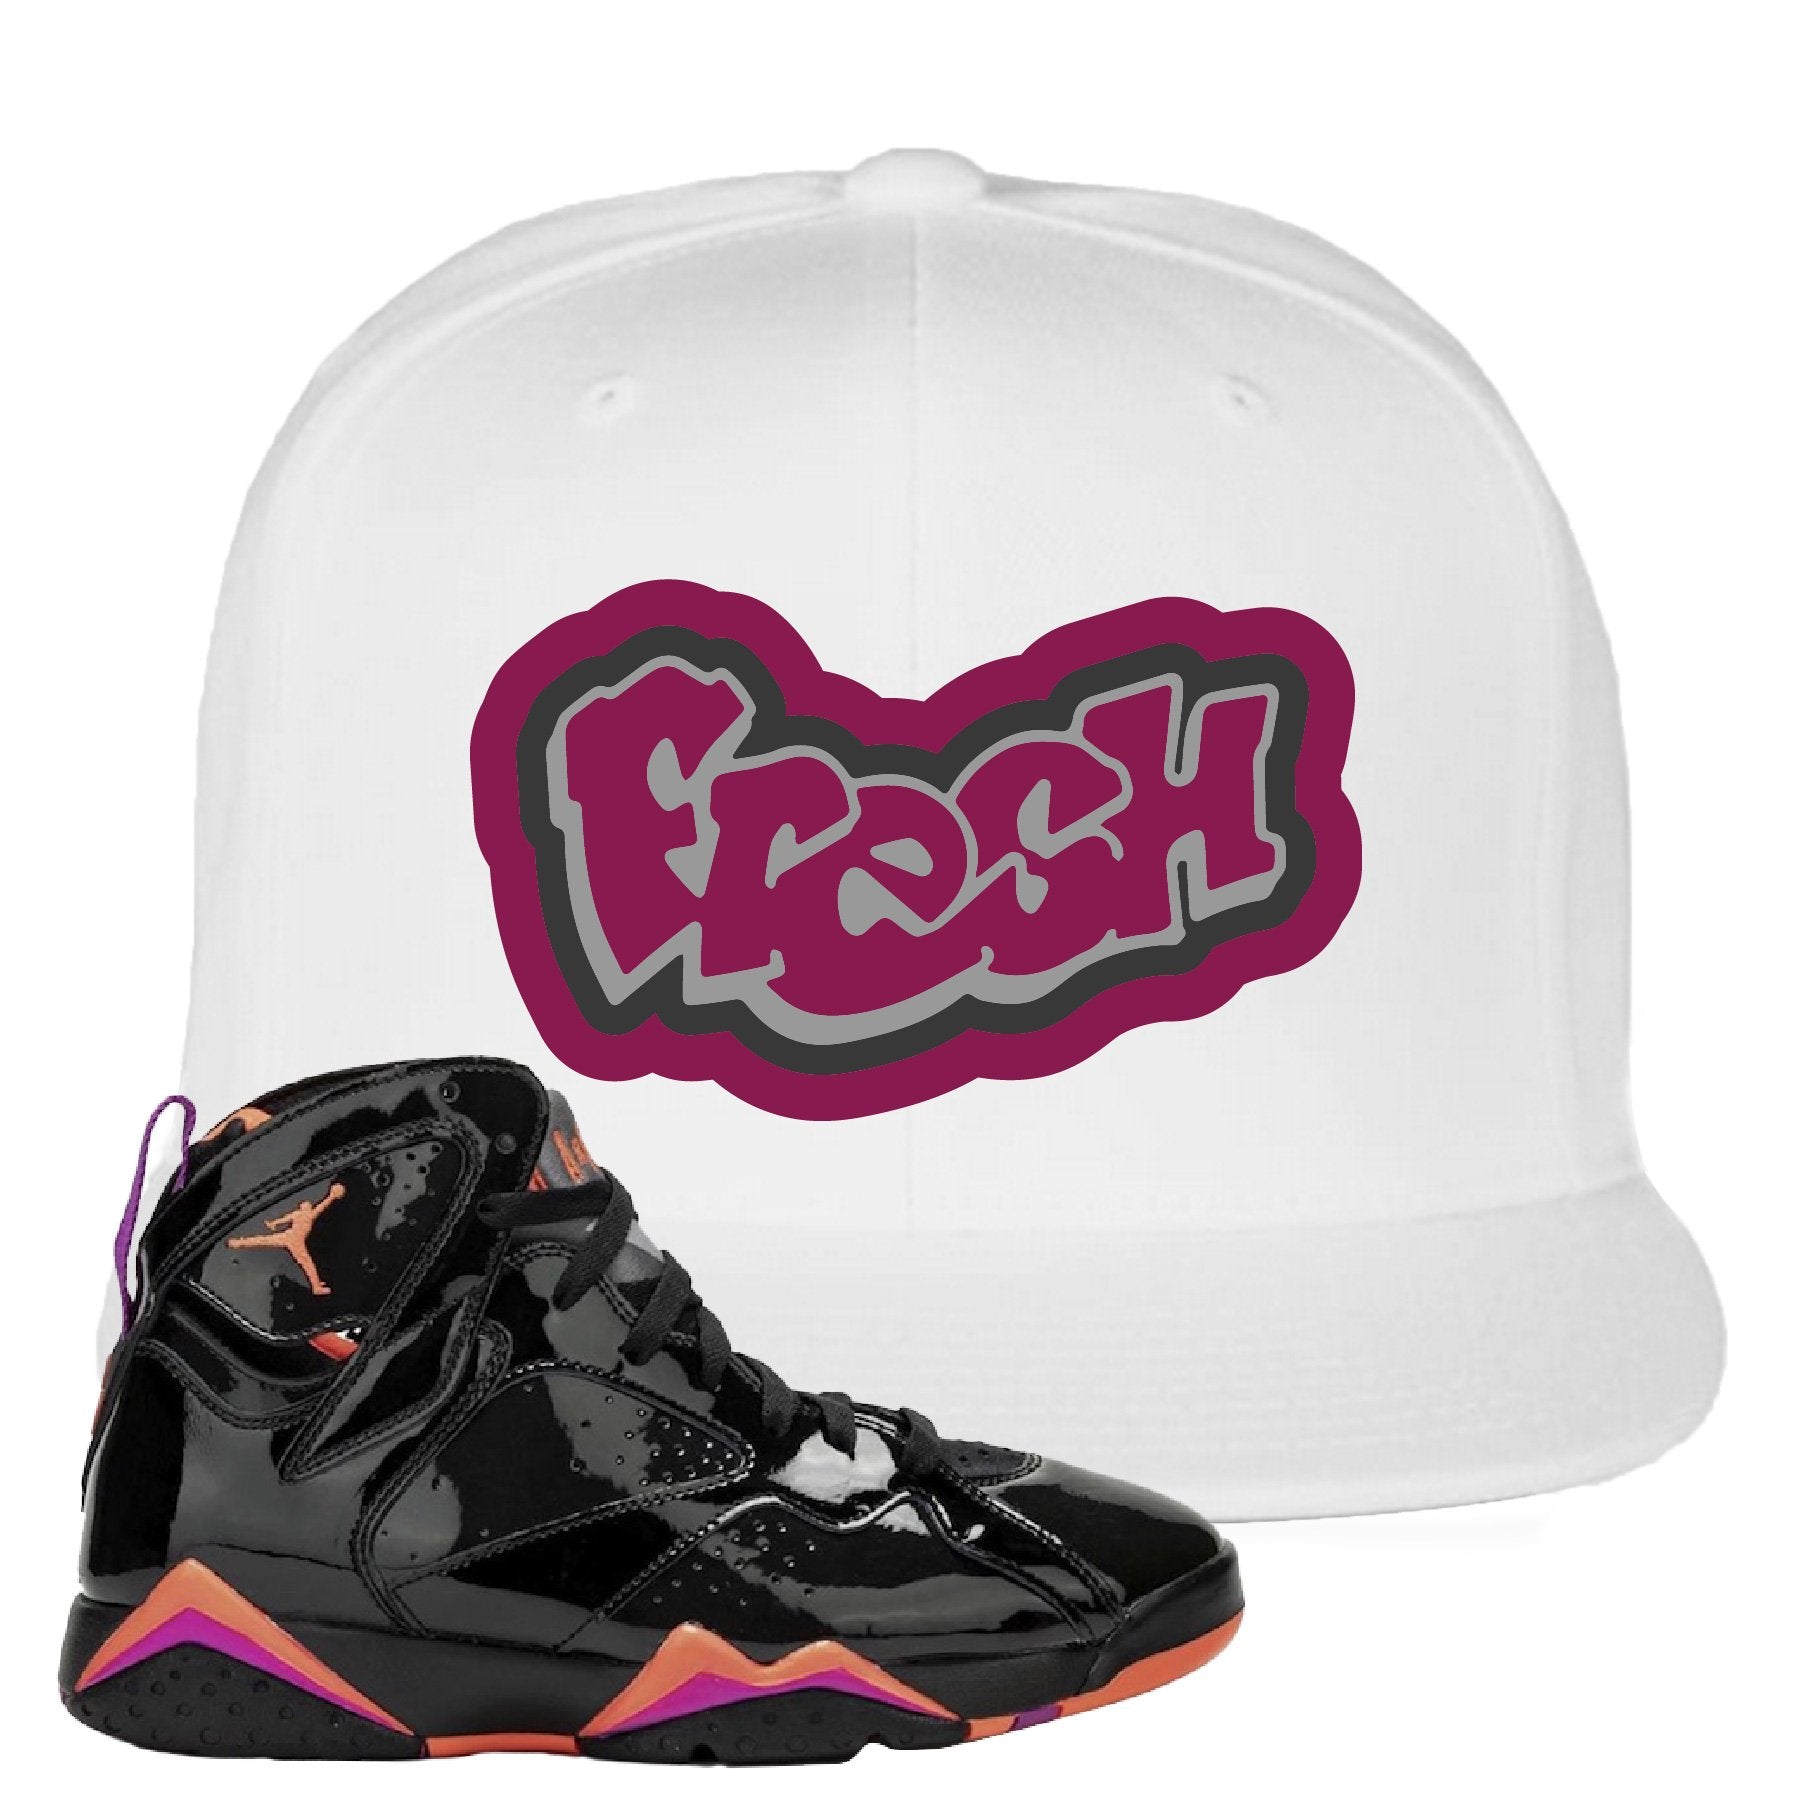 Jordan 7 WMNS Black Patent Leather Fresh White Sneaker Hook Up Snapback Hat